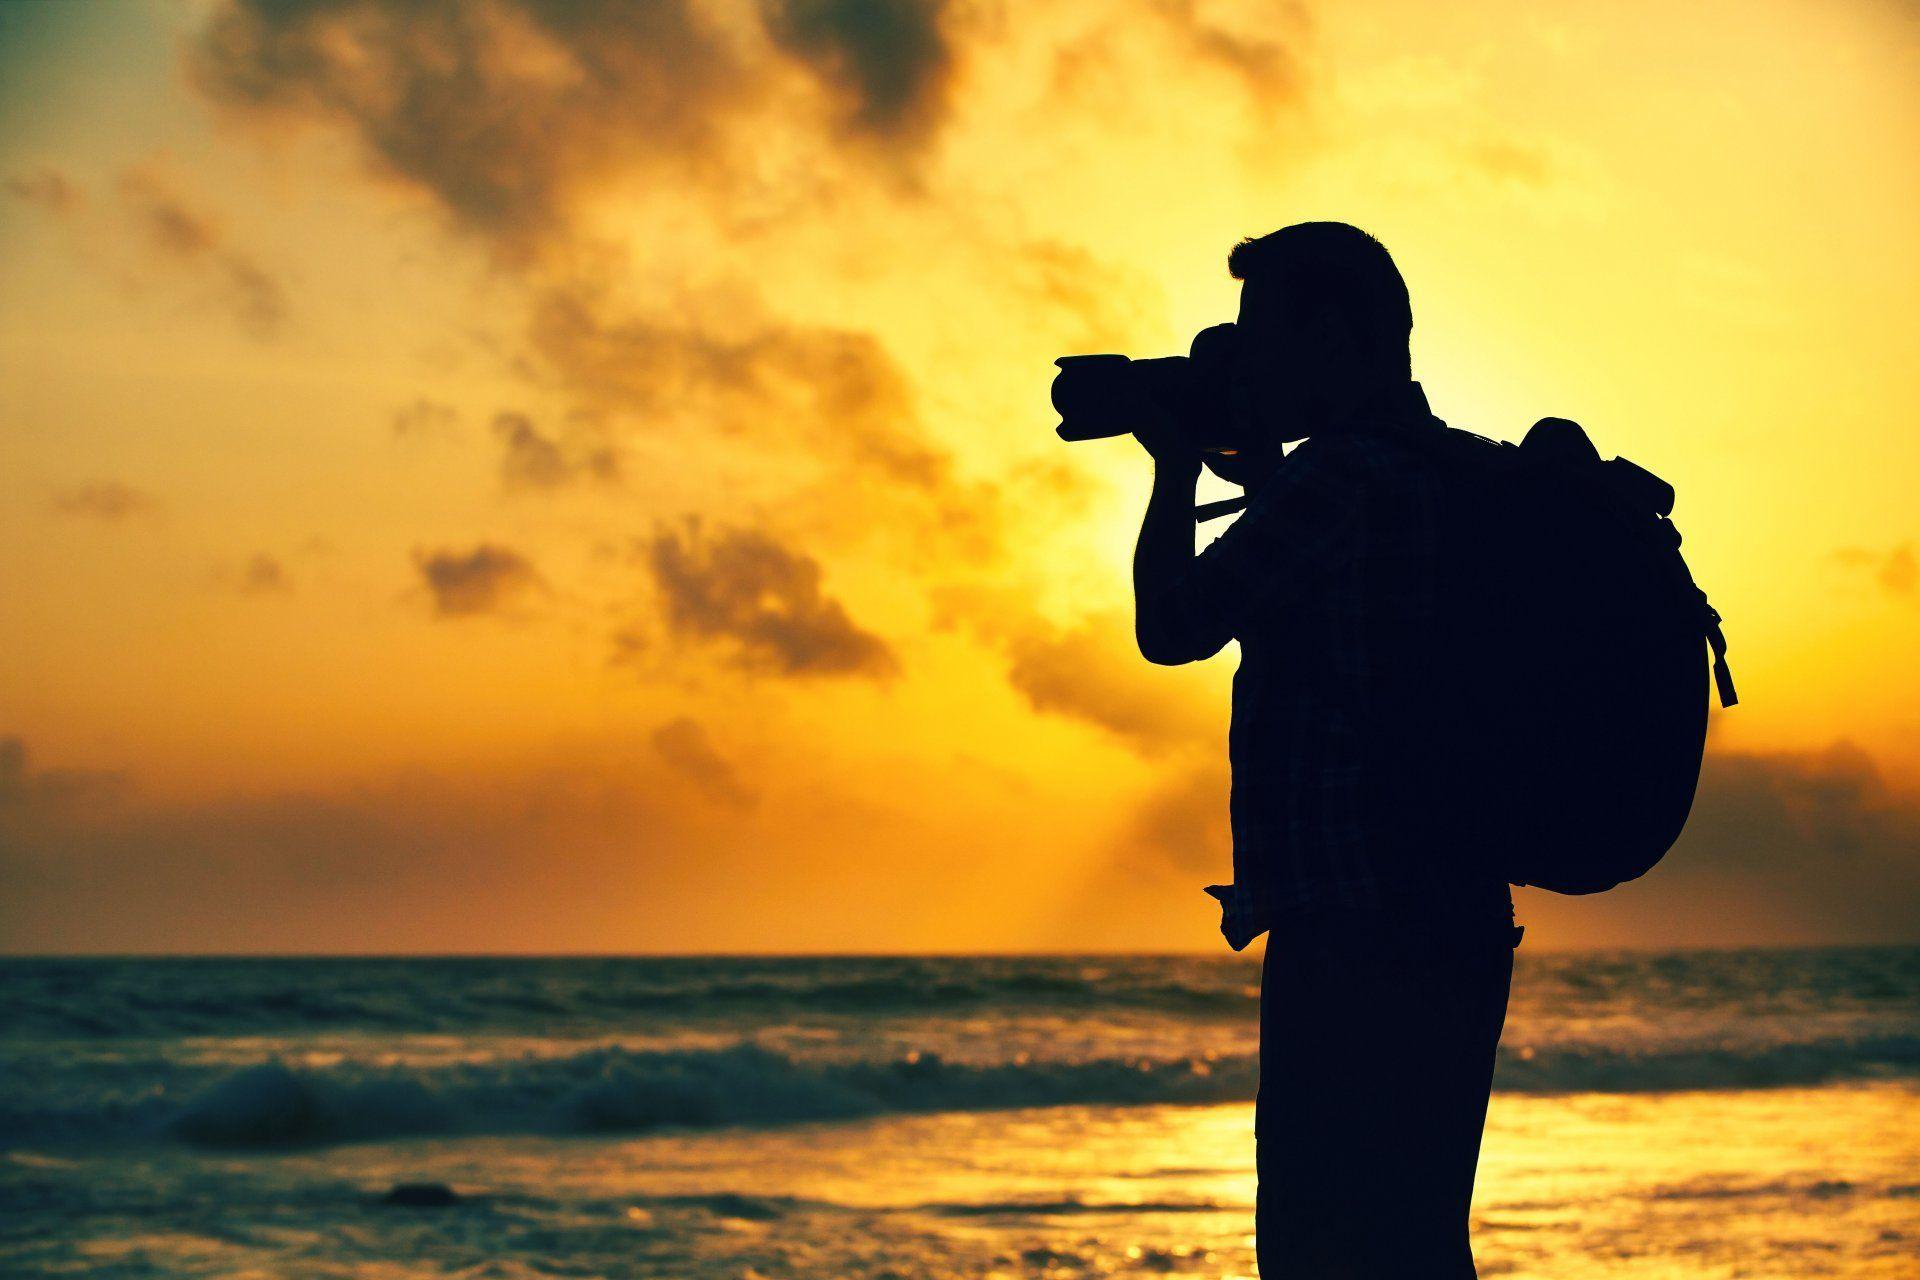 man traveller silhouette photographer photo the camera a camera